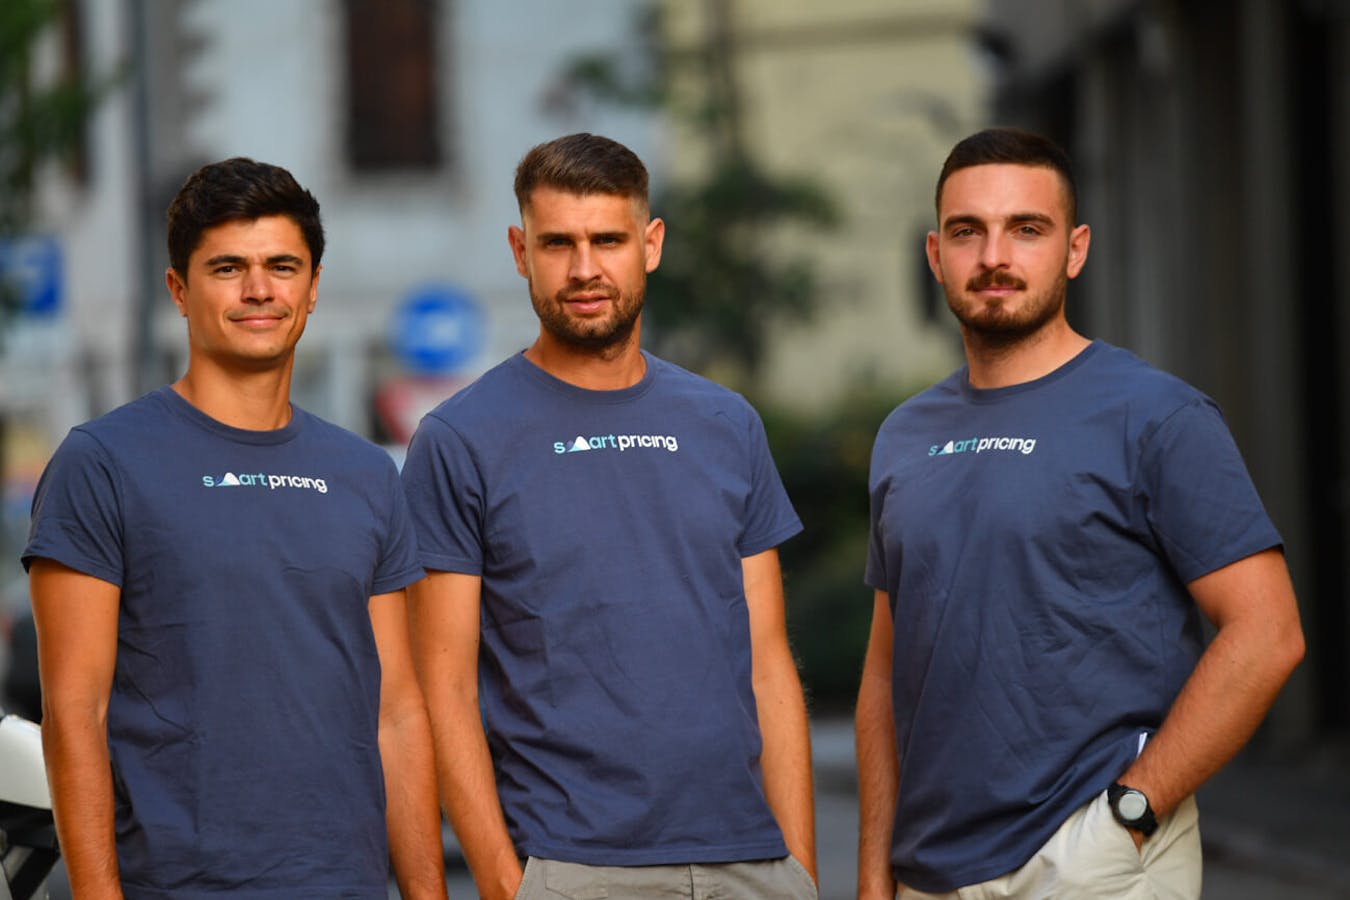 Smartpricing Founders: Luca Rodella, Tommaso Centonze, Eugenio Bancaro